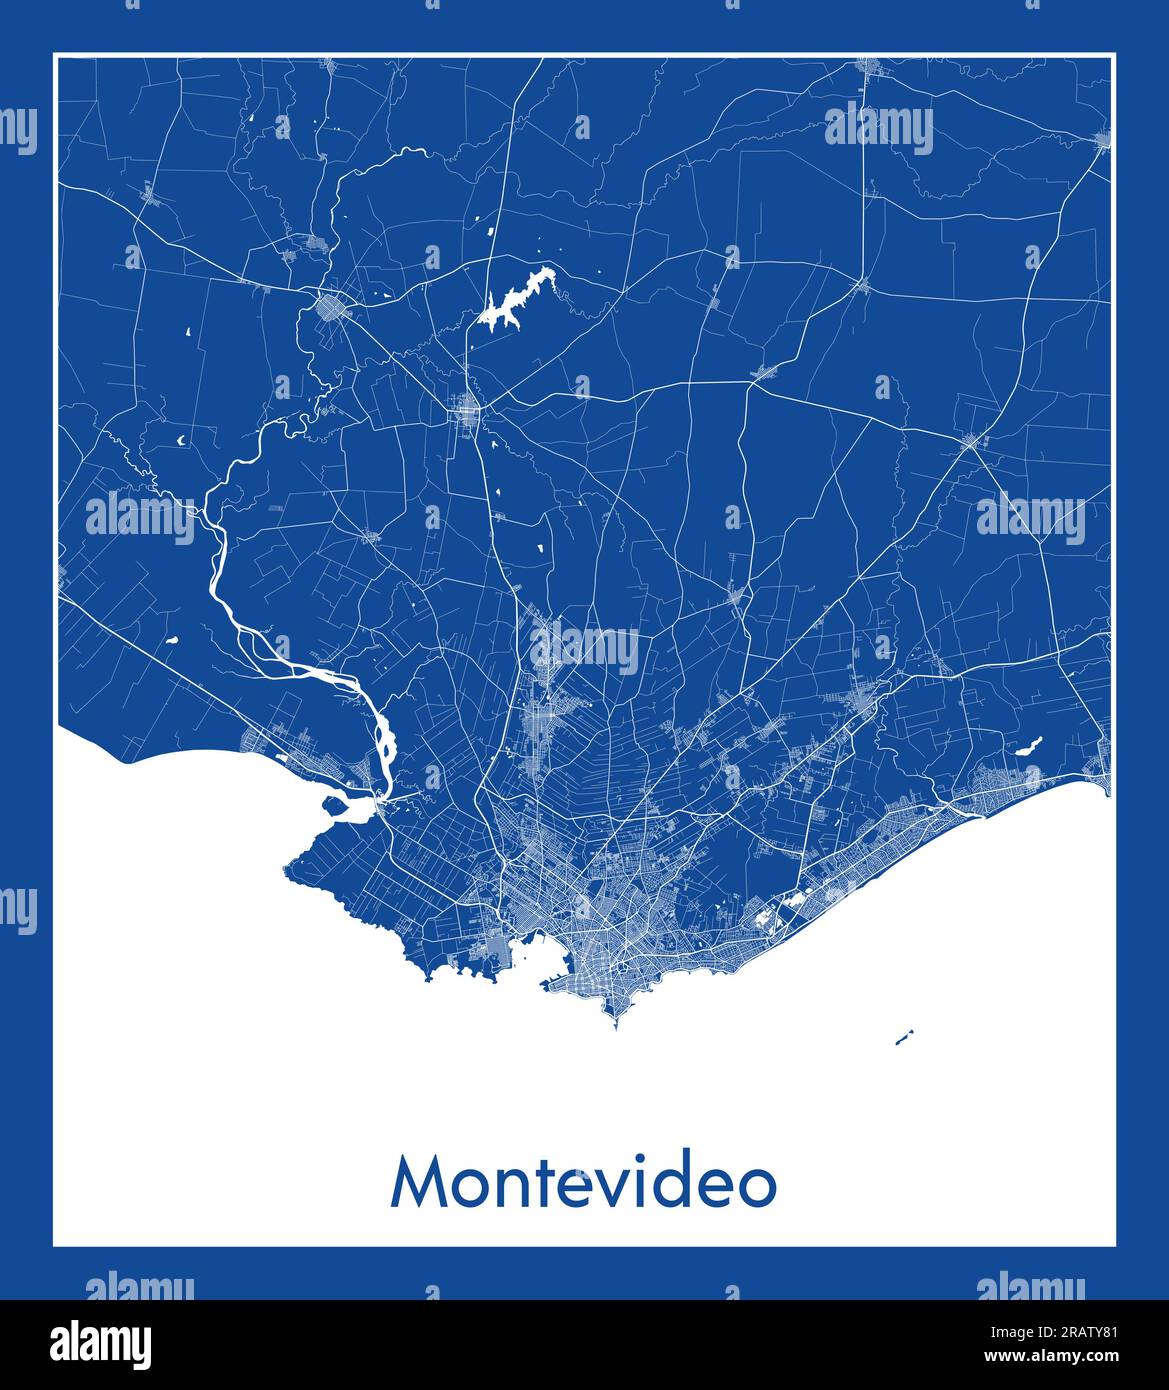 Montevideo Uruguay South America City map blue print vector illustration Stock Vector